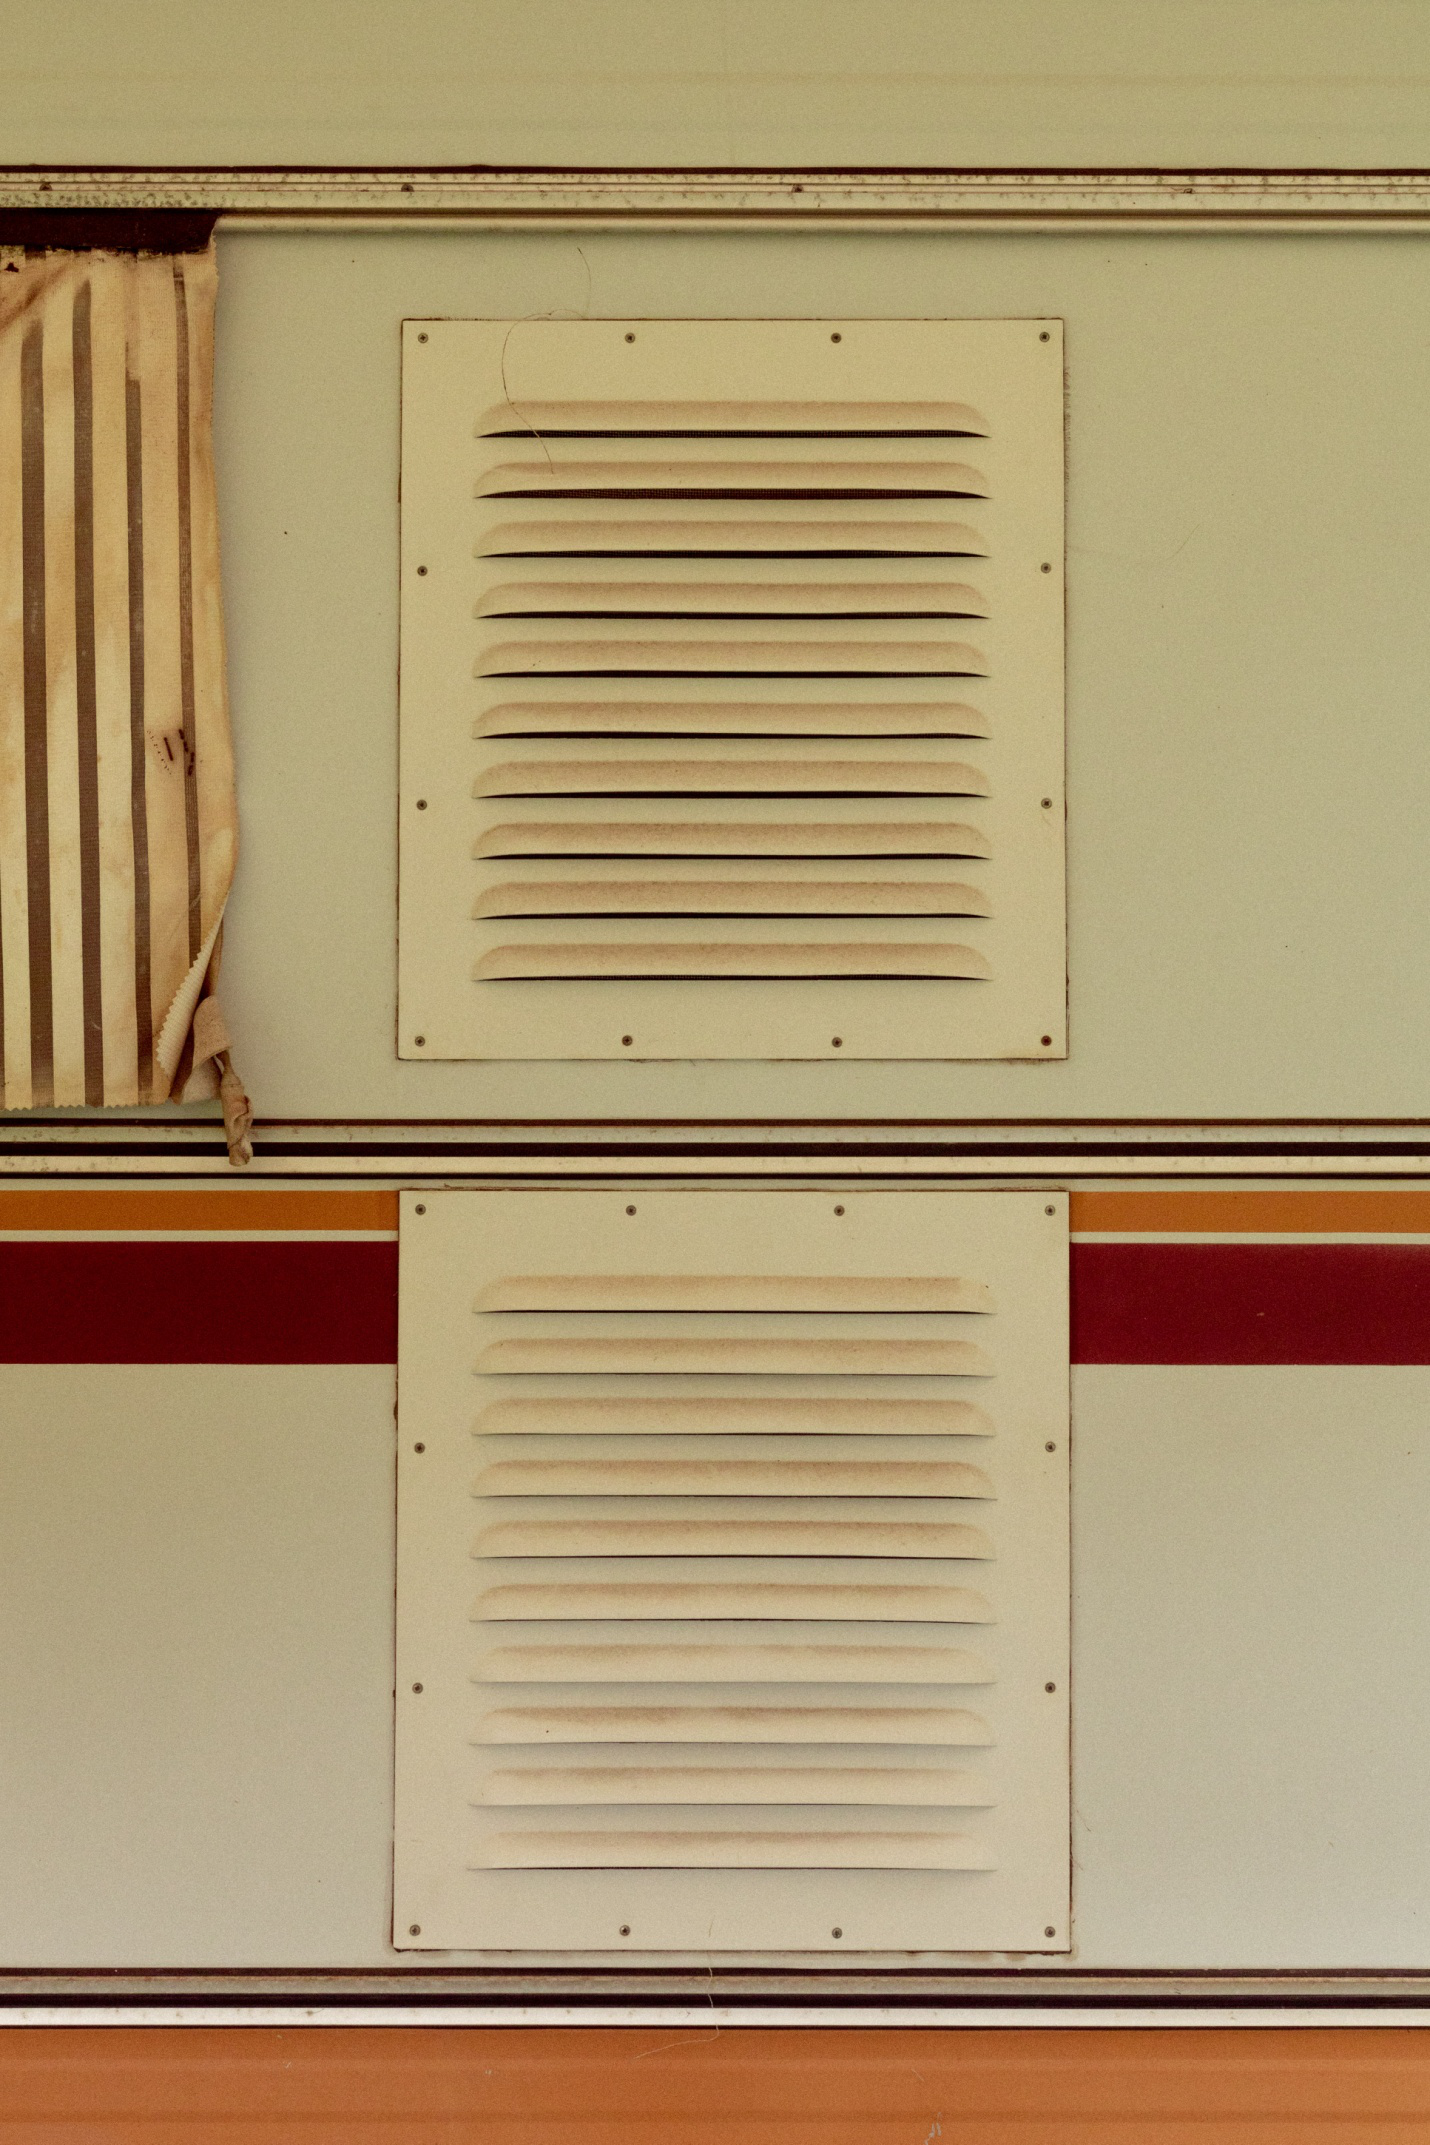 A vent for room ventilation